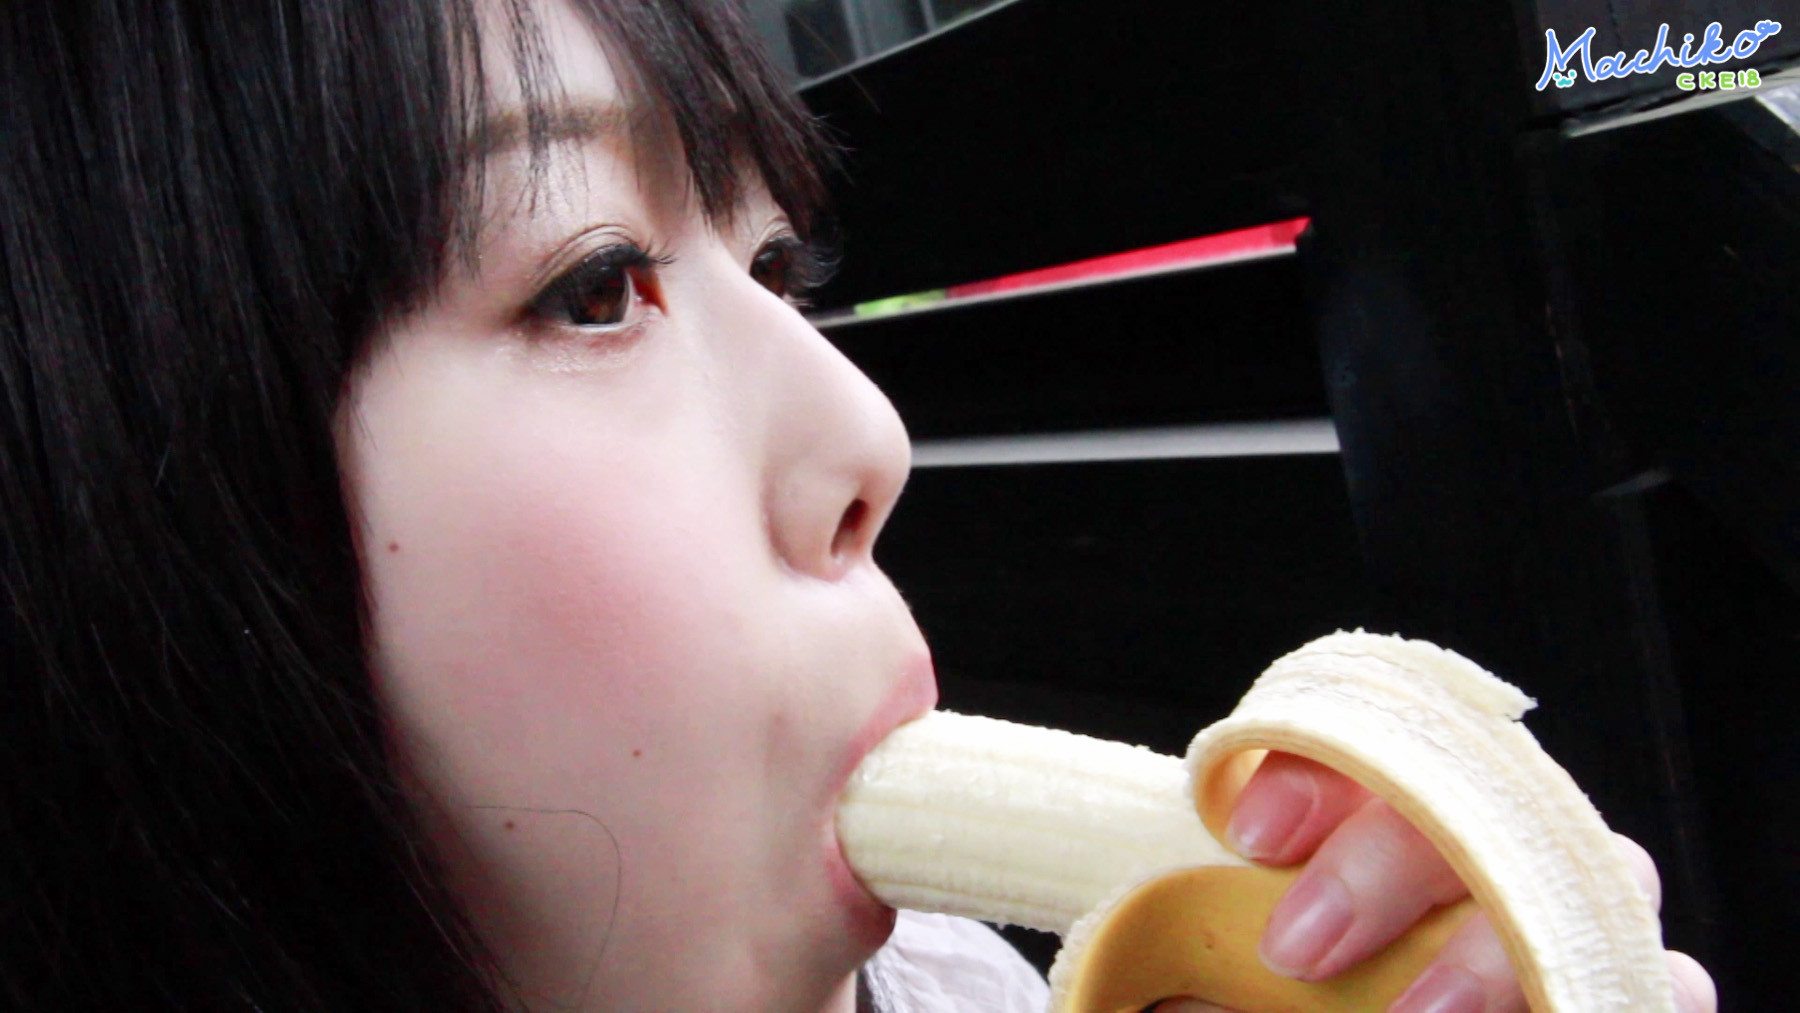 Giovane giapponese succhia la banana
 #69770391